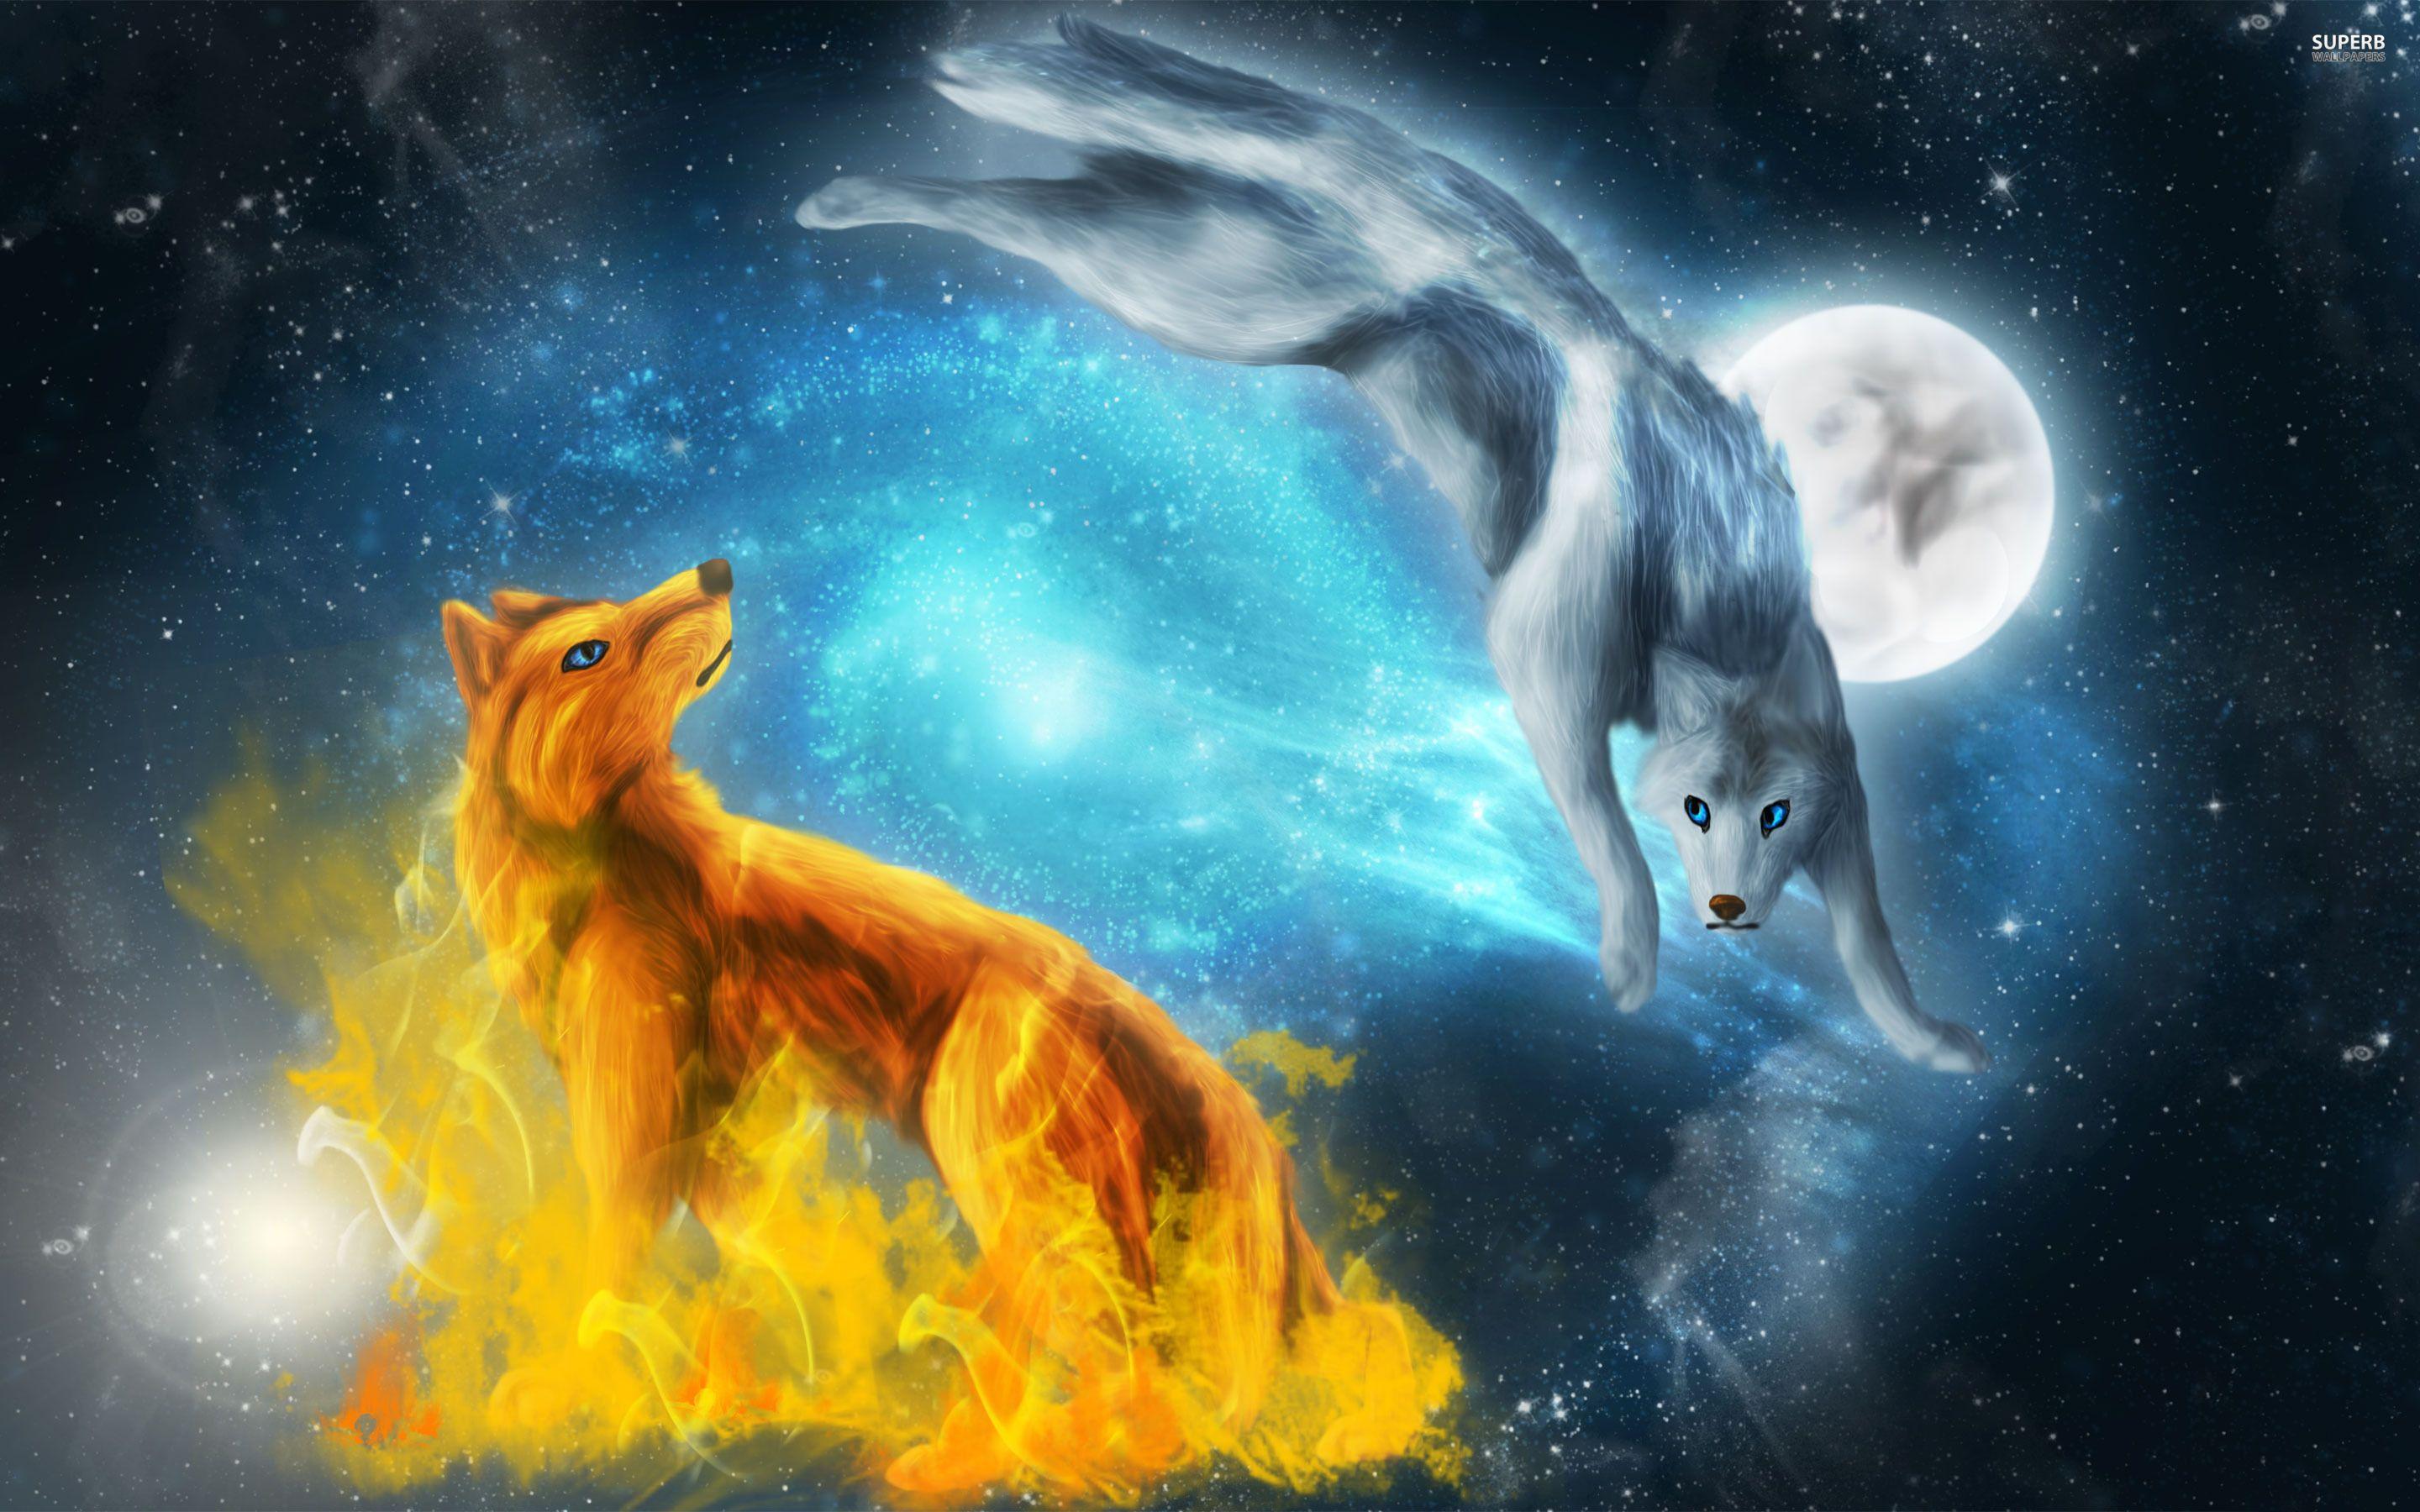 Amazing Wolves Image: Amazing Wolves image. Wolf wallpaper, Ice wolf wallpaper, Fantasy wolf